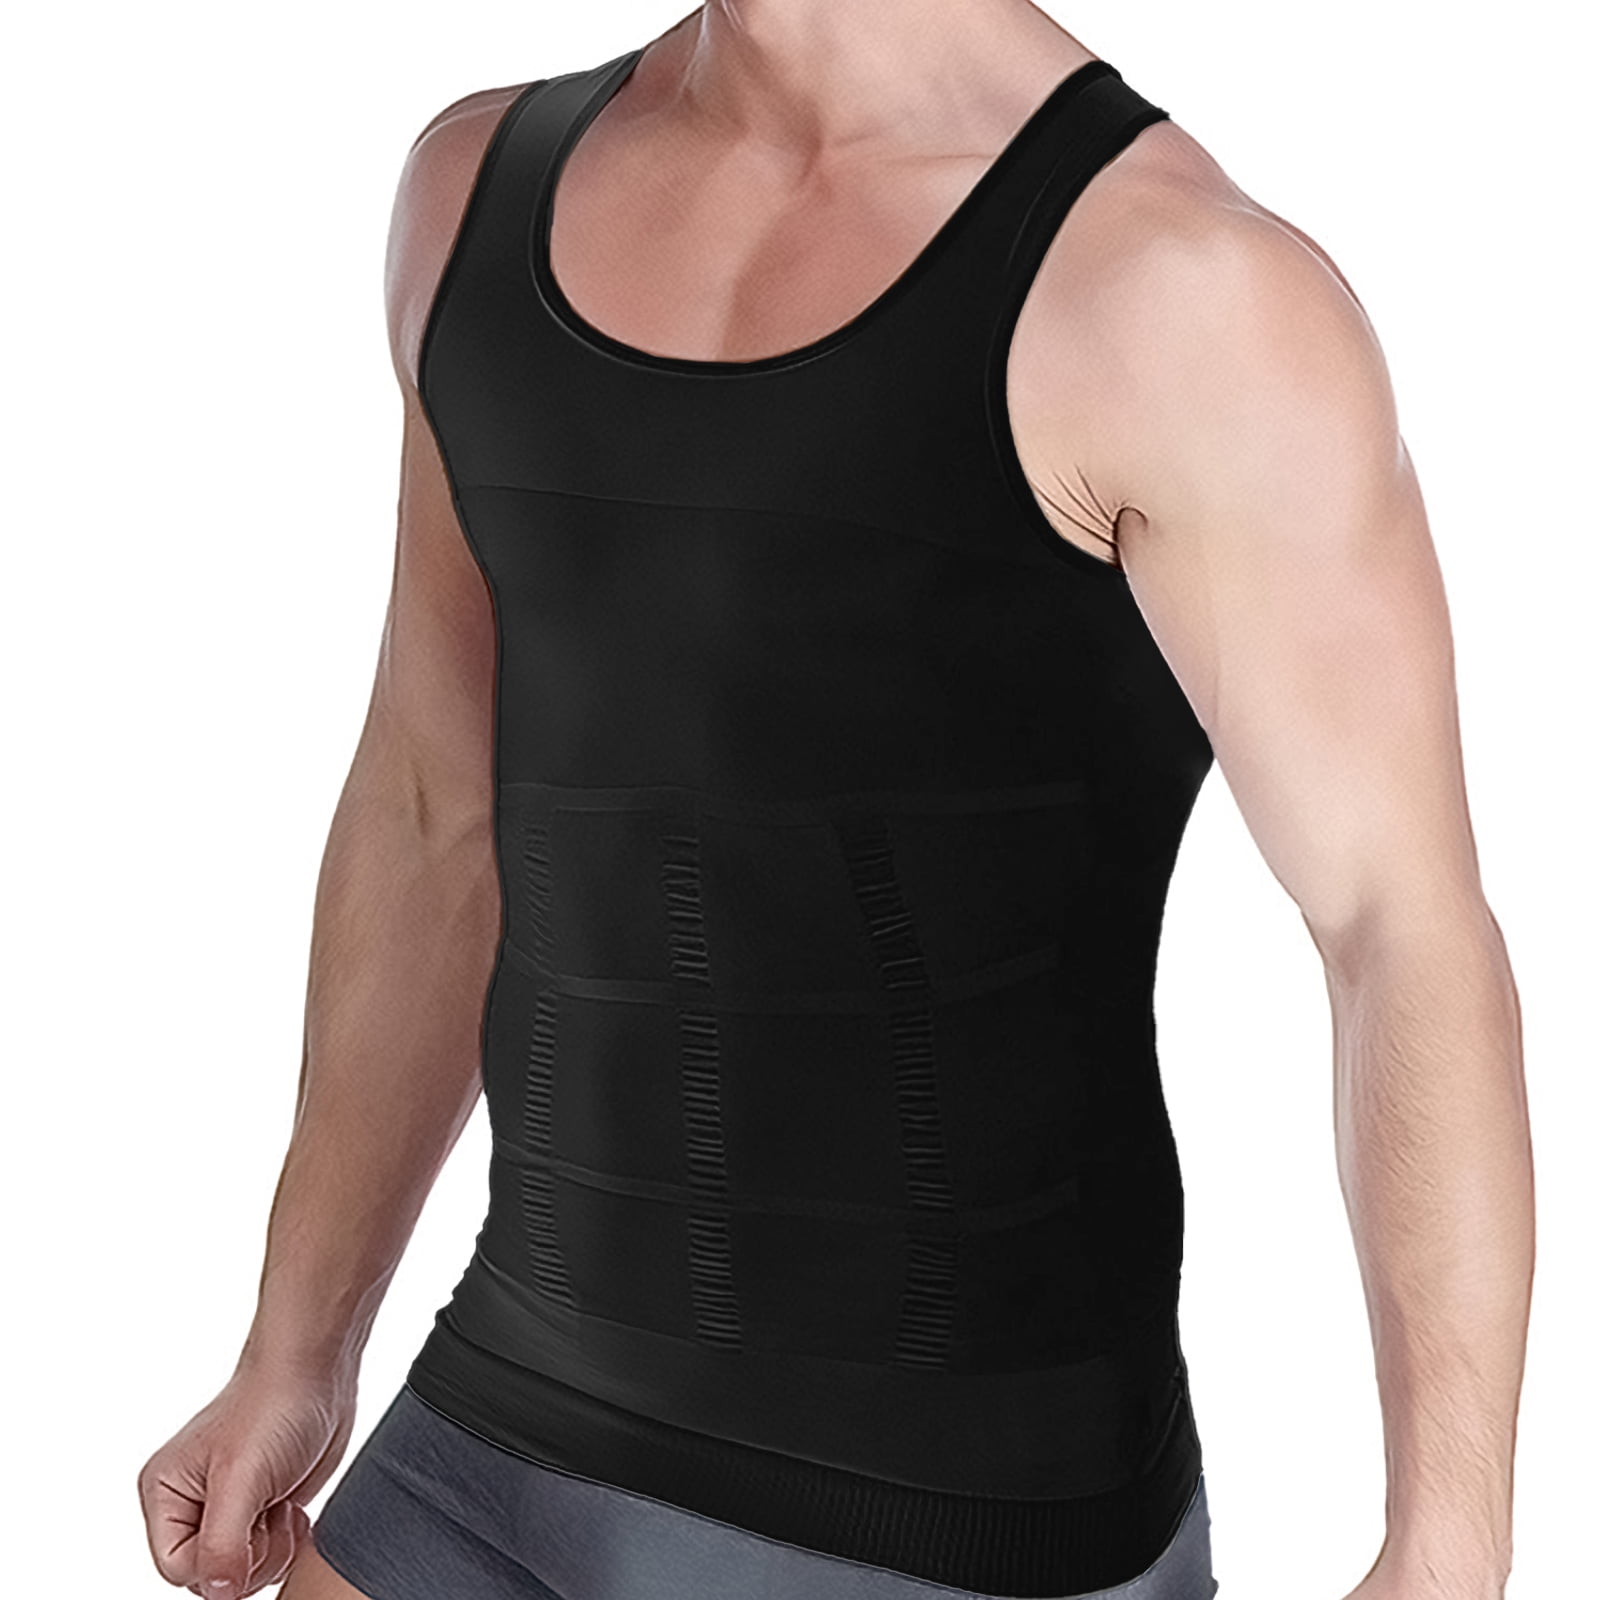 Aptoco Vest for Men,Compression Slimming Vest Body Shaper Tops for Weight Loss,Neoprene Chest Body Tight Underwear White XL 